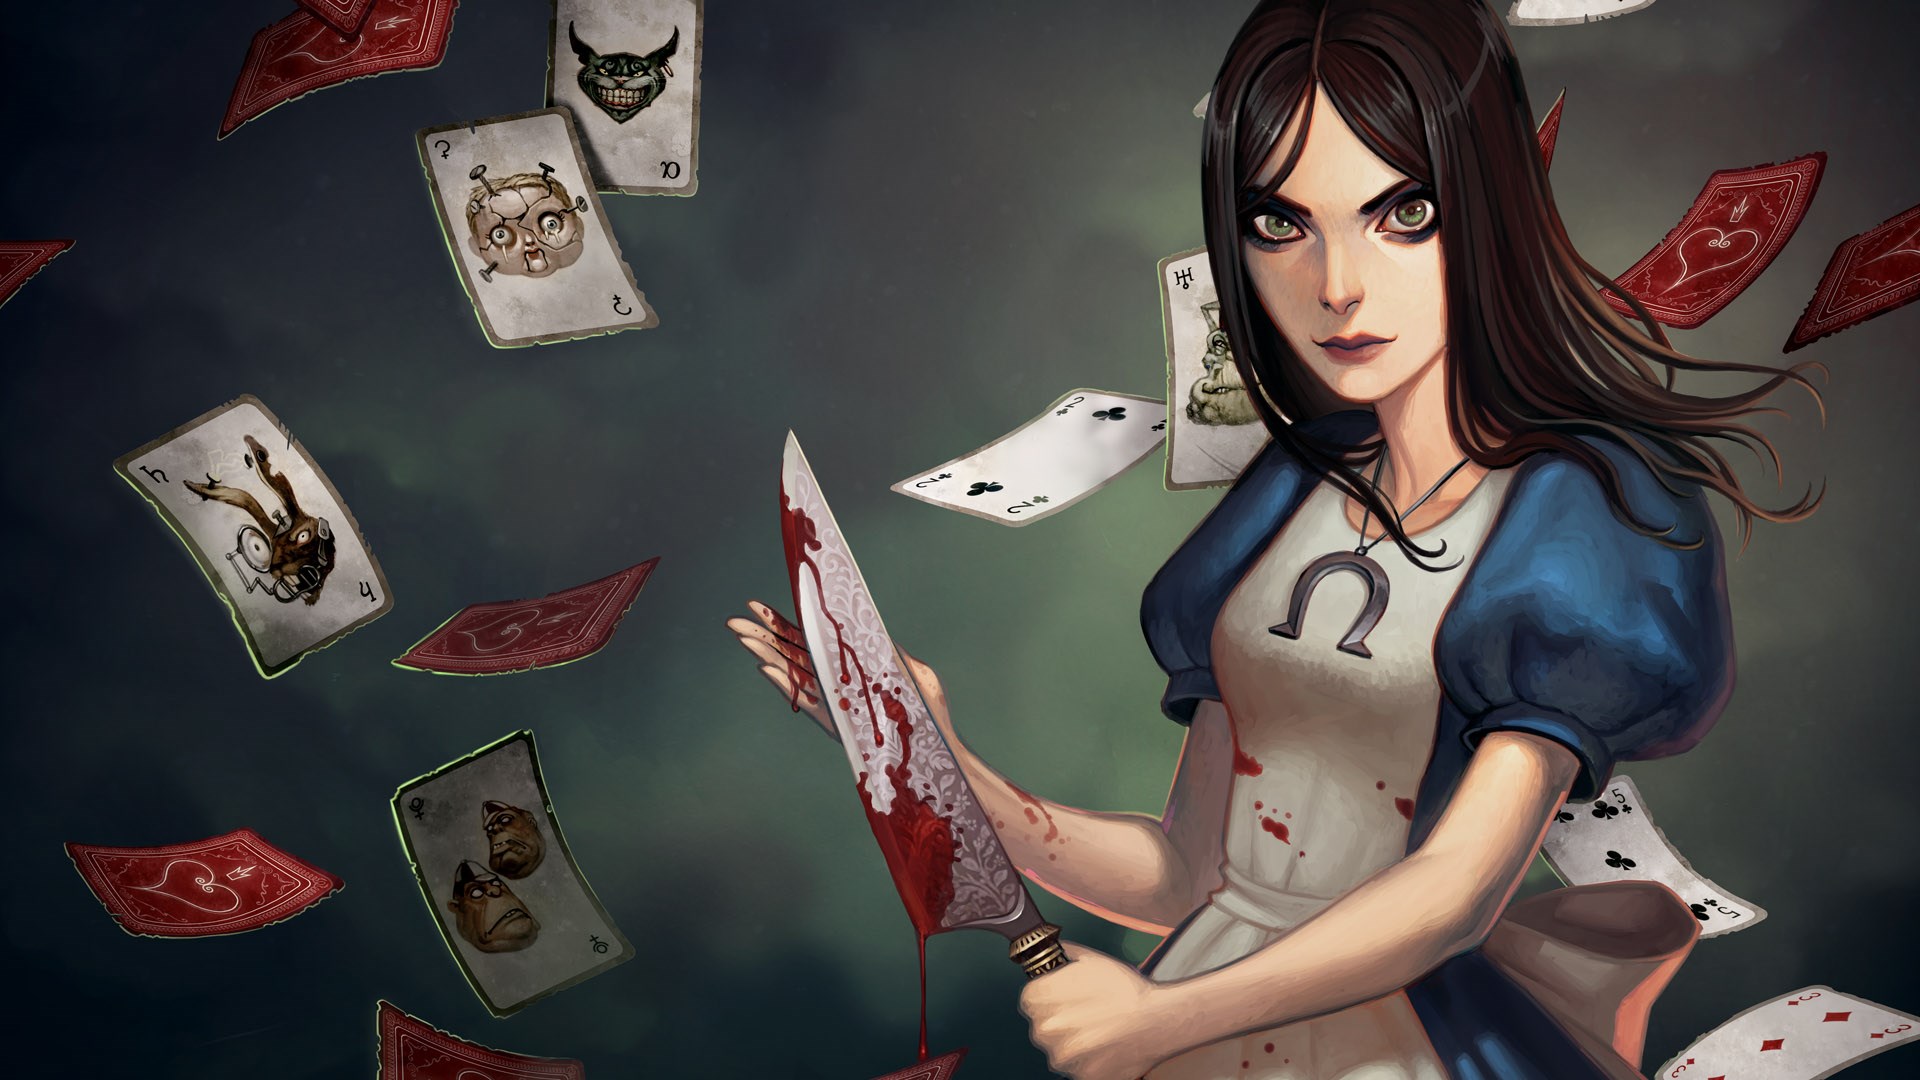  Alice: Madness Returns - Xbox 360 : Electronic Arts